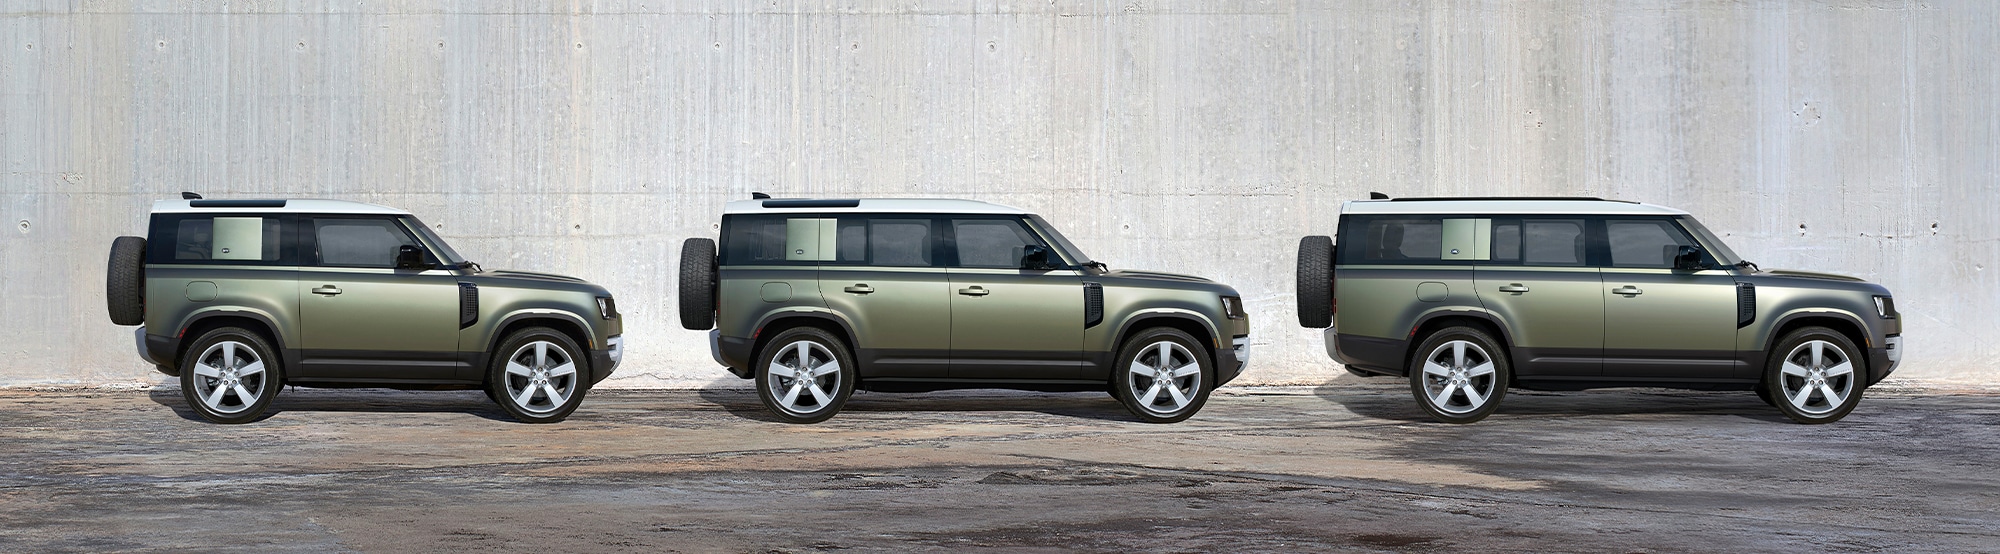 Land Rover Defender | Land Rover Alexandria